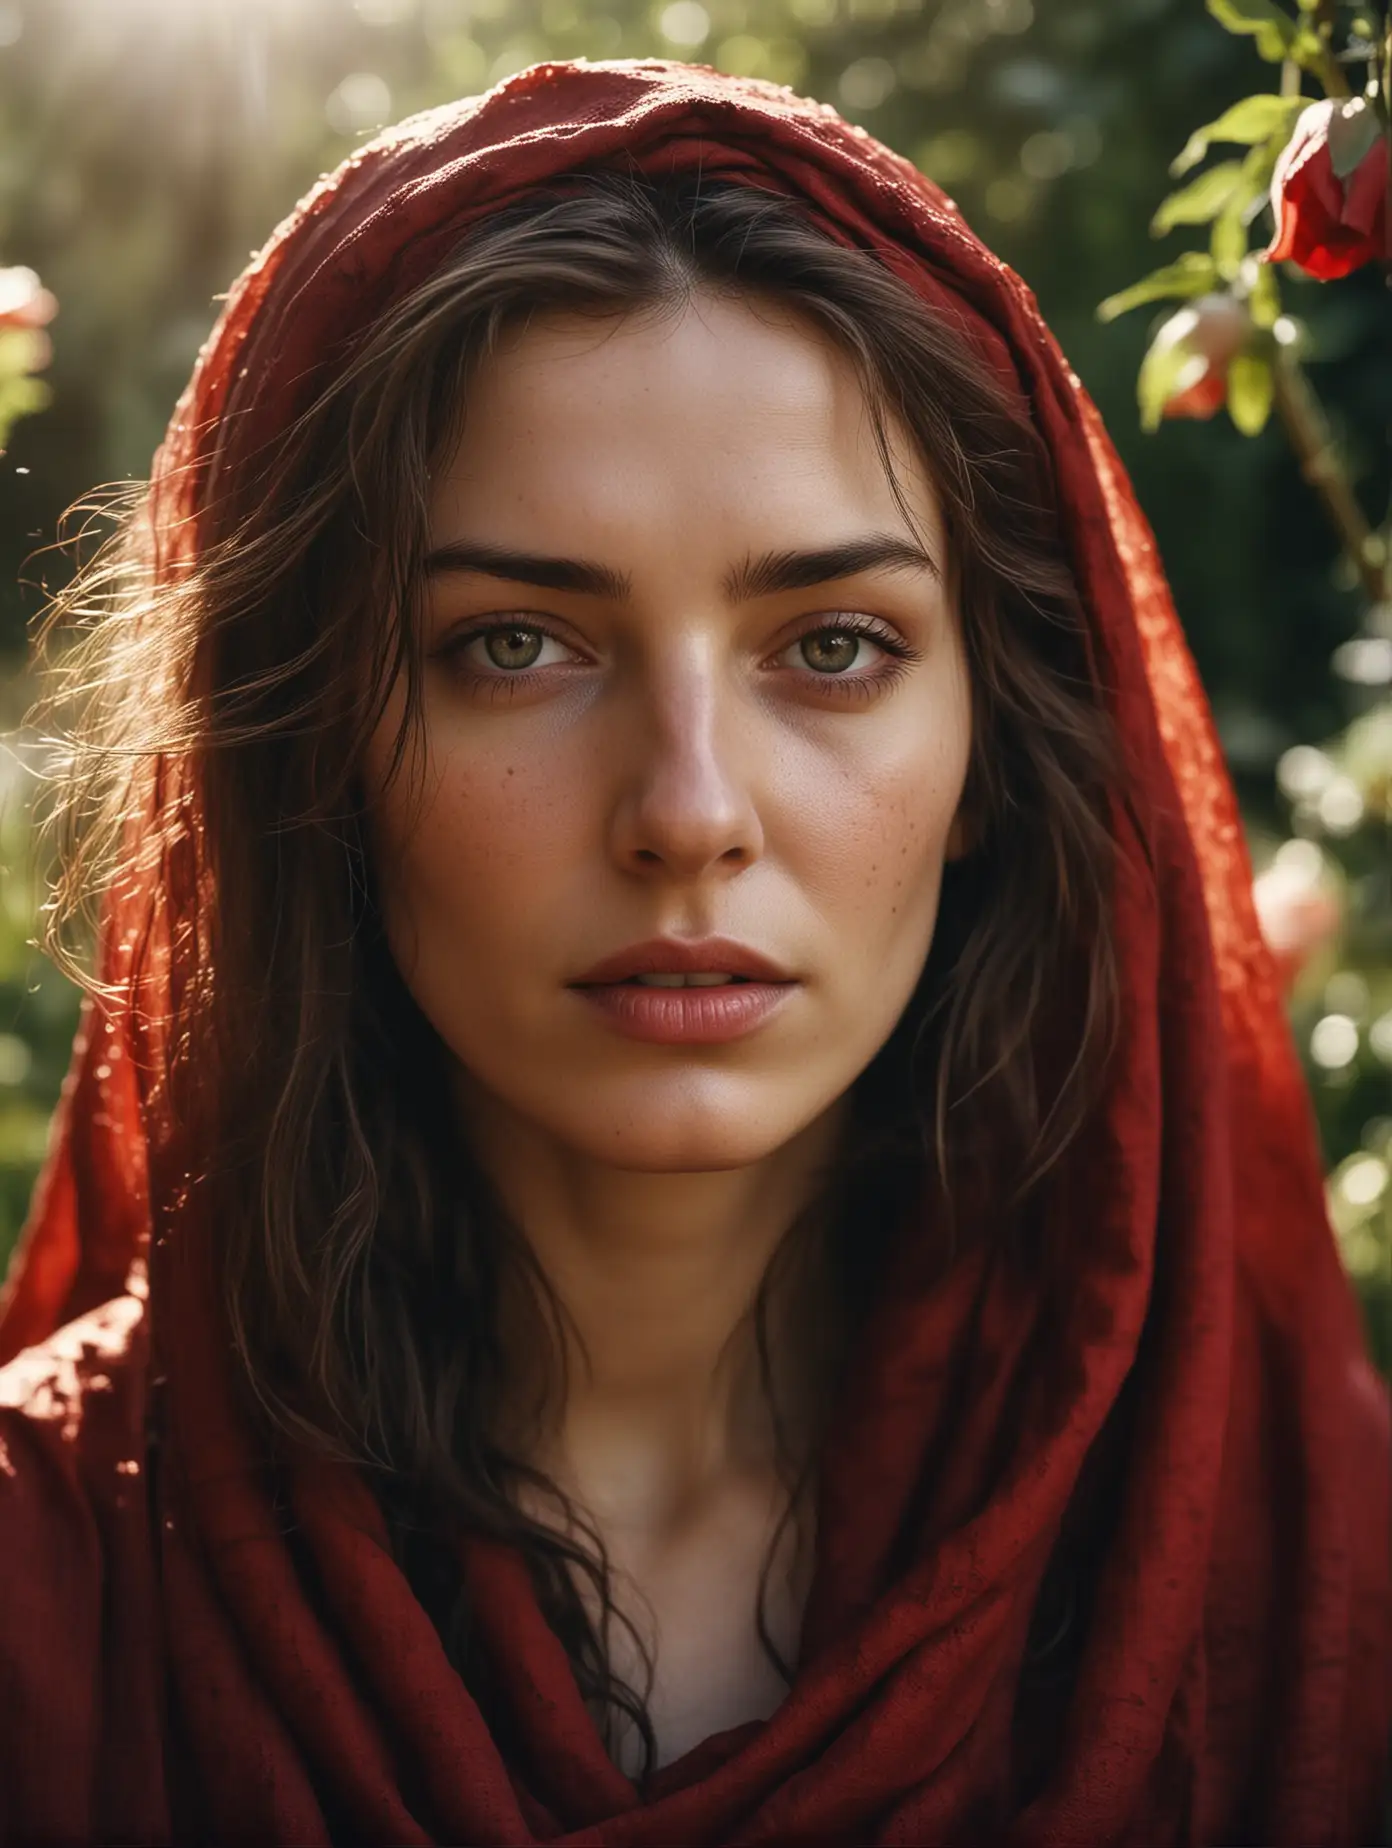 Emotive Portrait of Mary Magdalene with Dark Red Headscarf